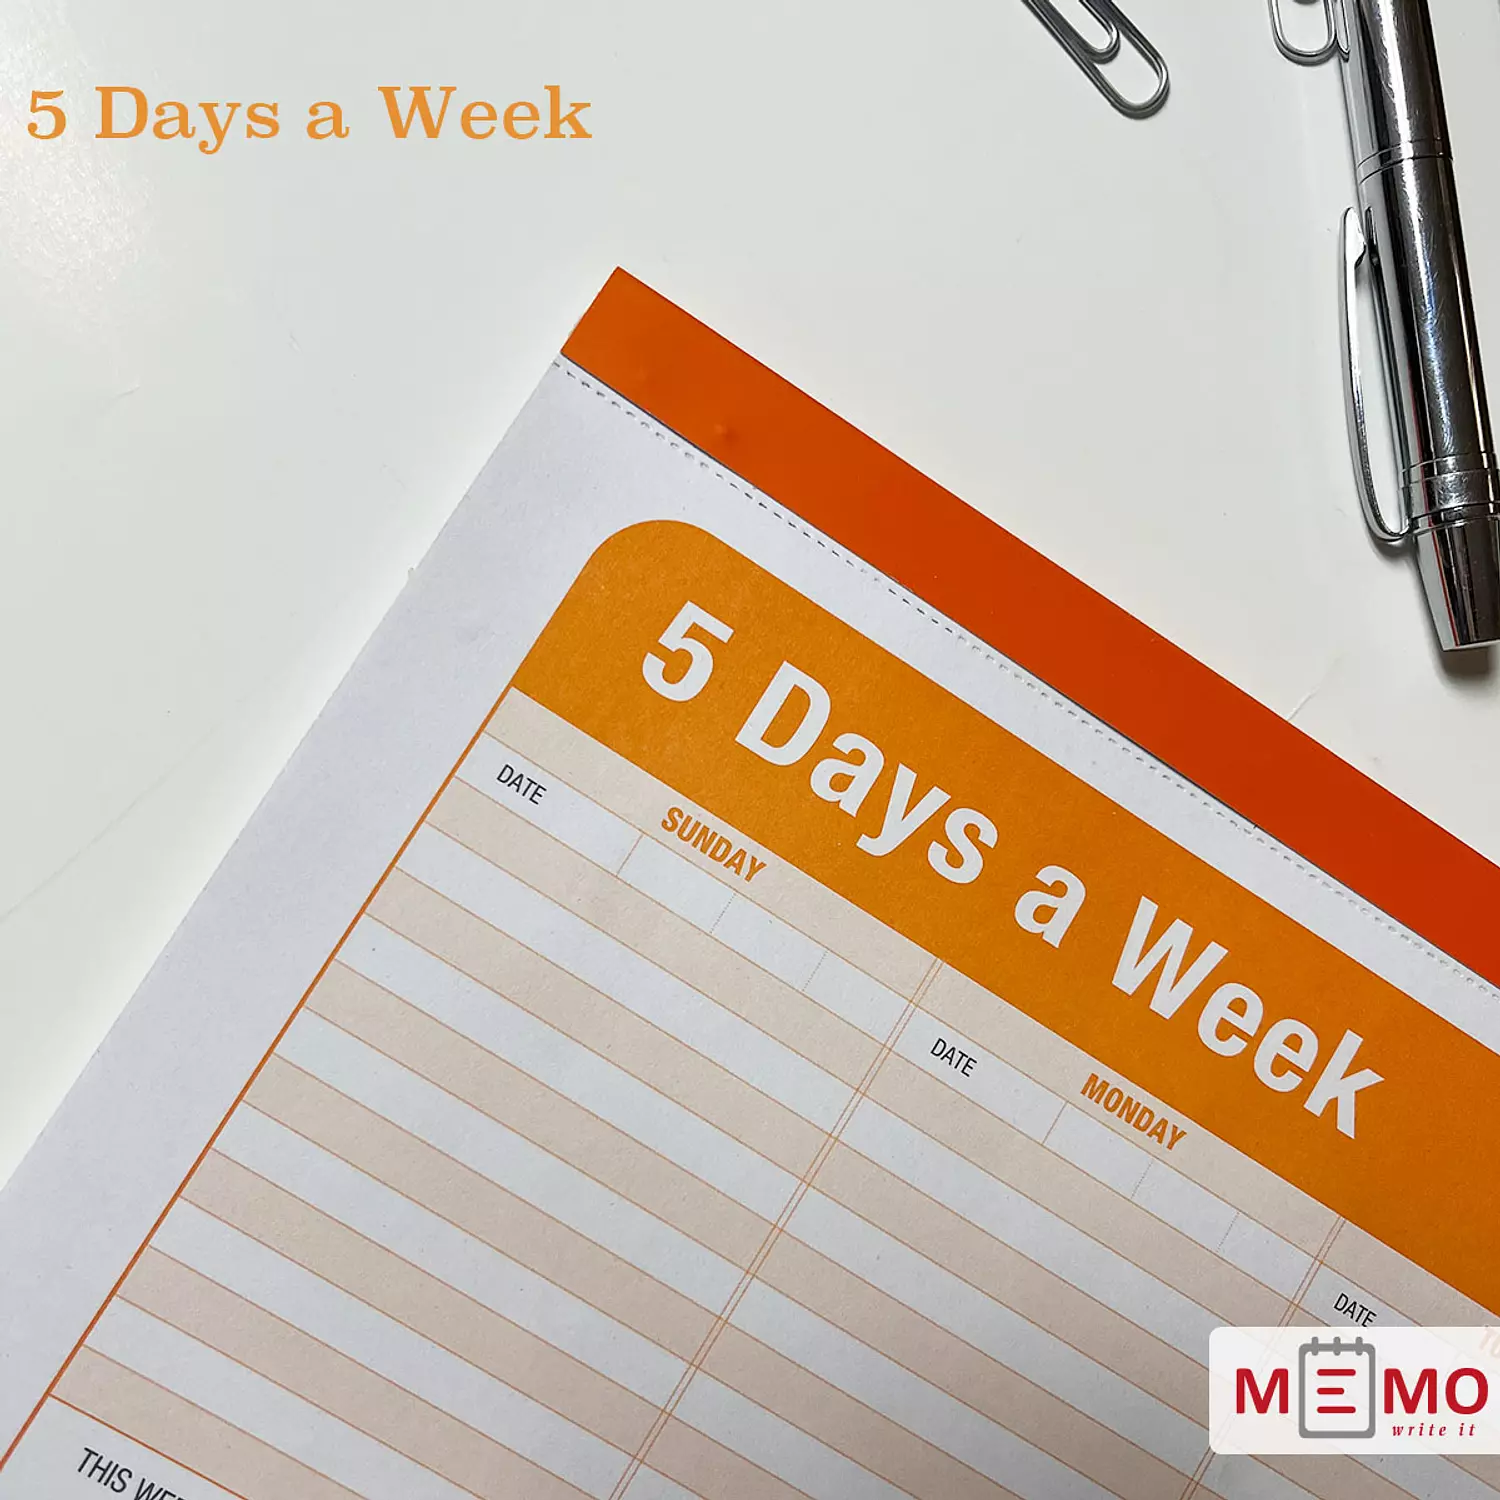  Memo 5 days a week 2